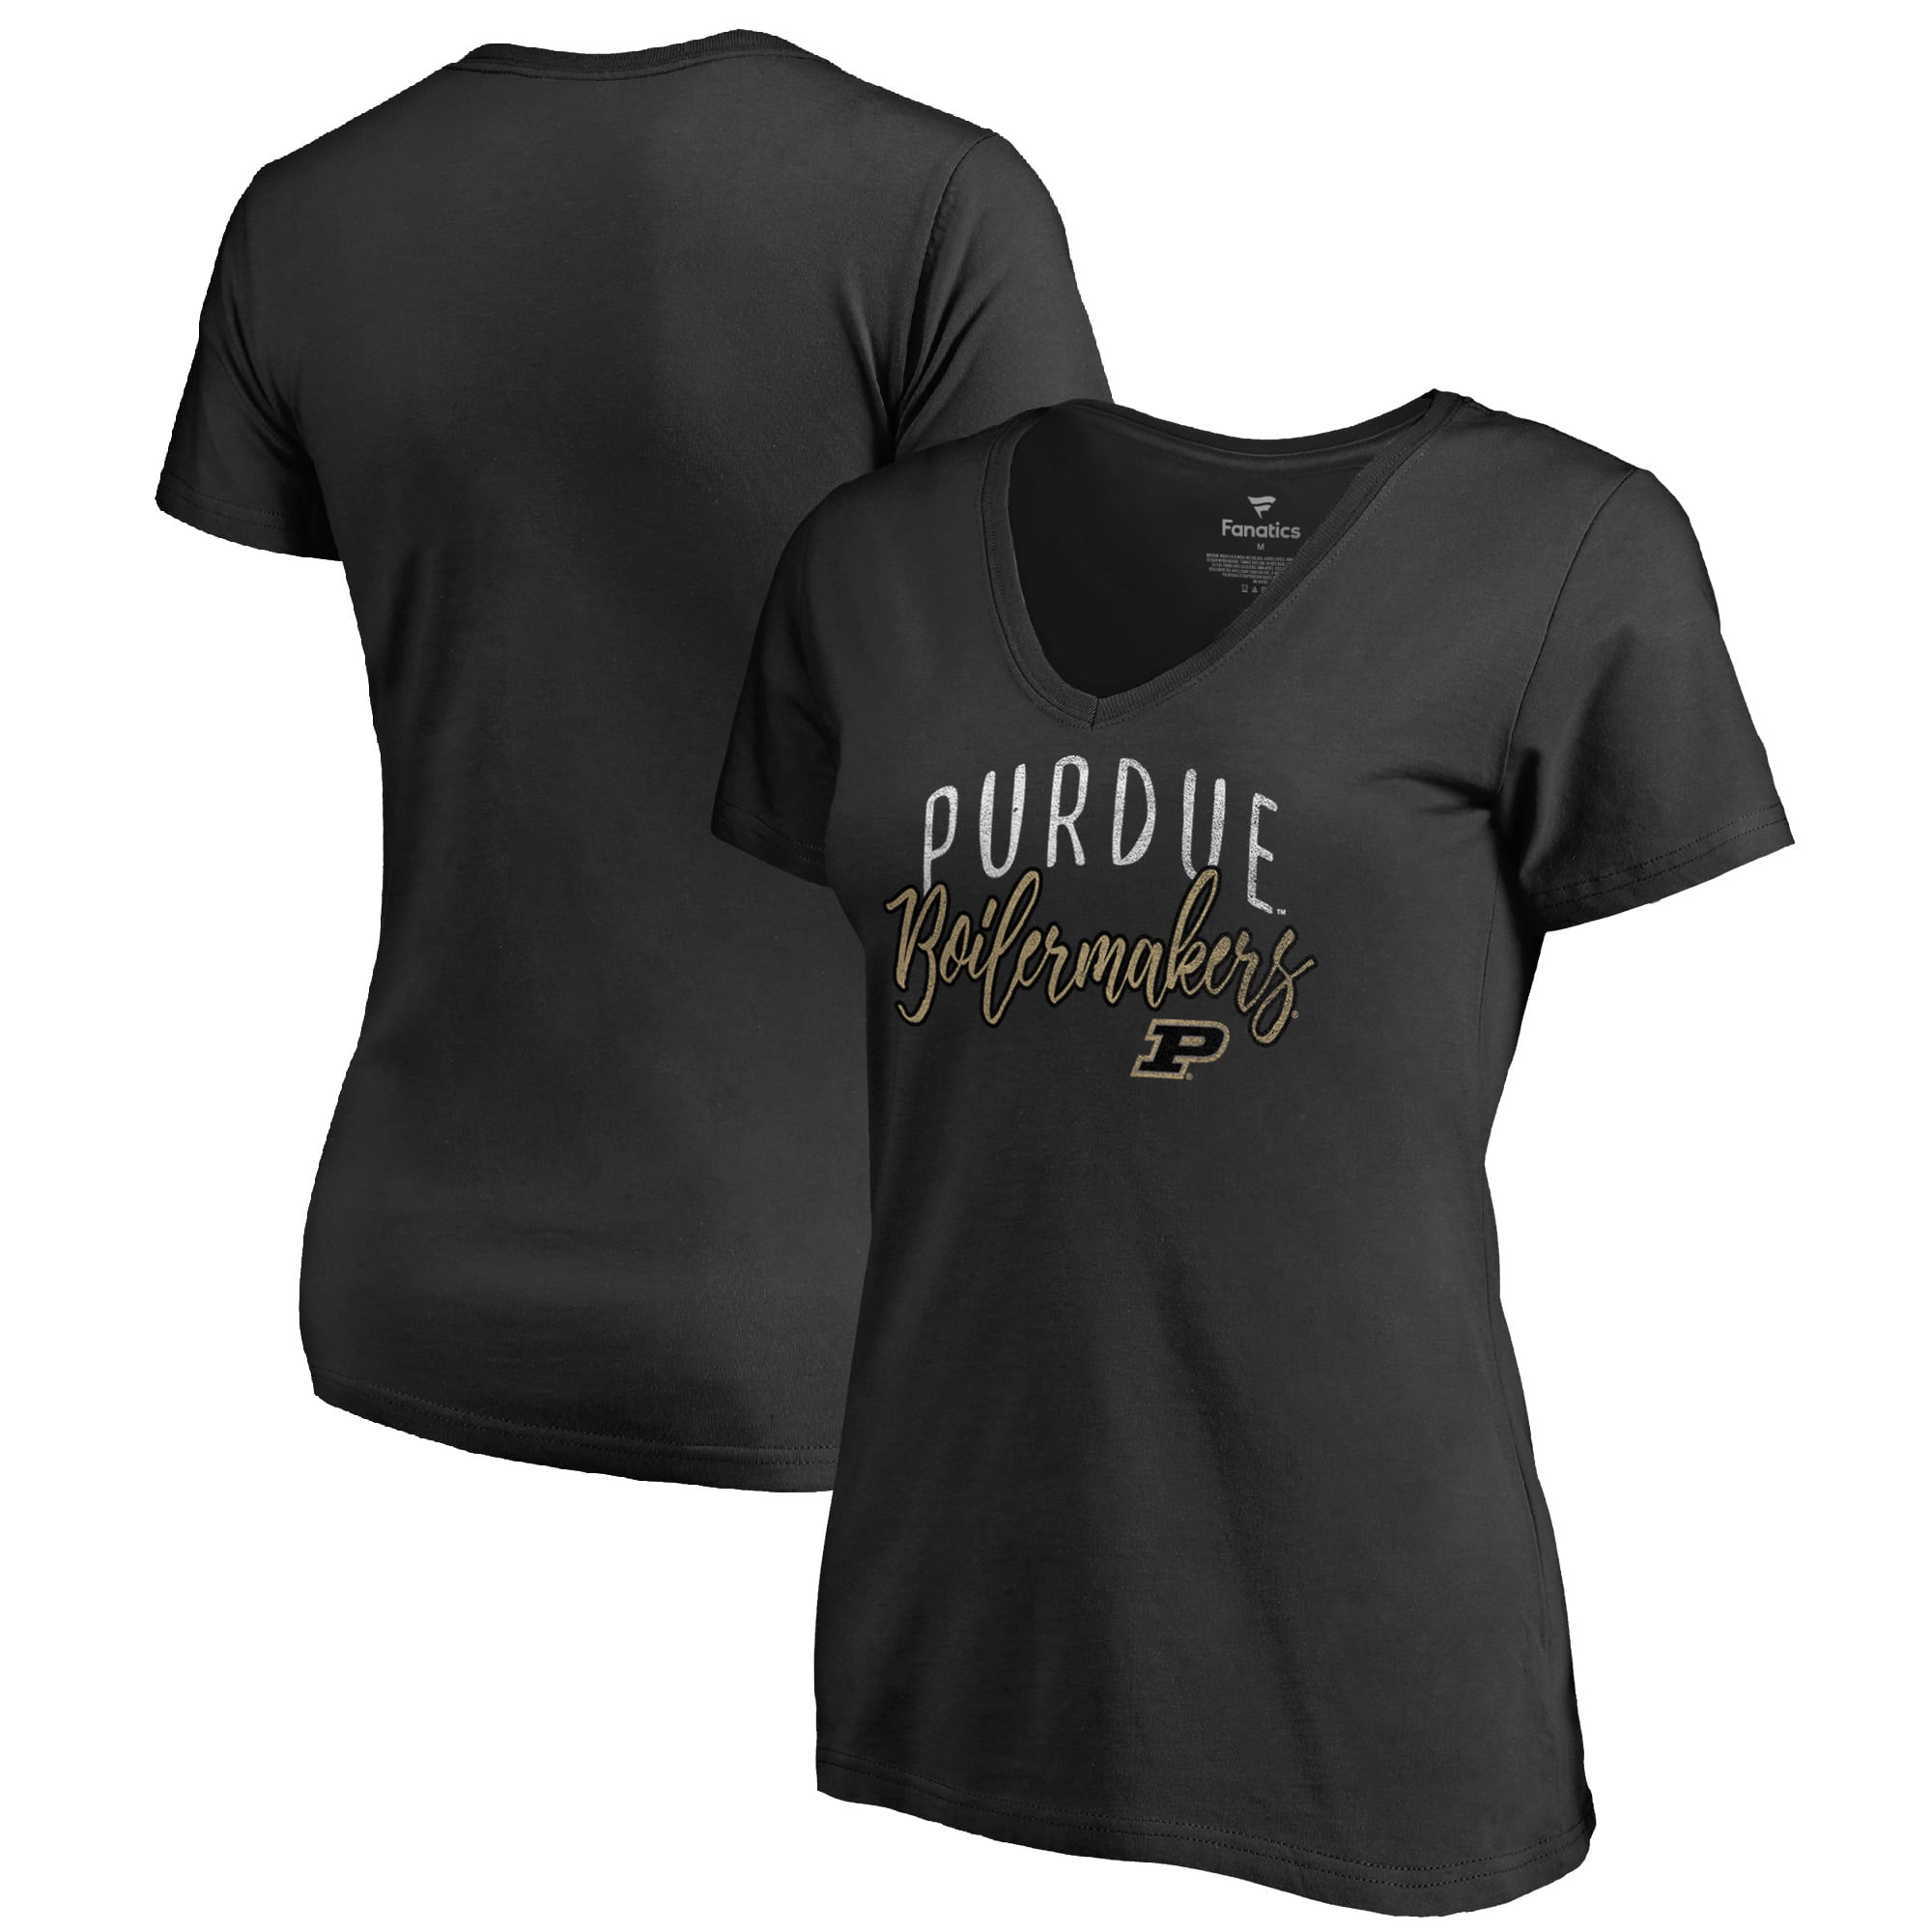 UGP Campus Apparel LS1053 Black Purdue Boilermakers Tail Script Womens T-Shirt Small 